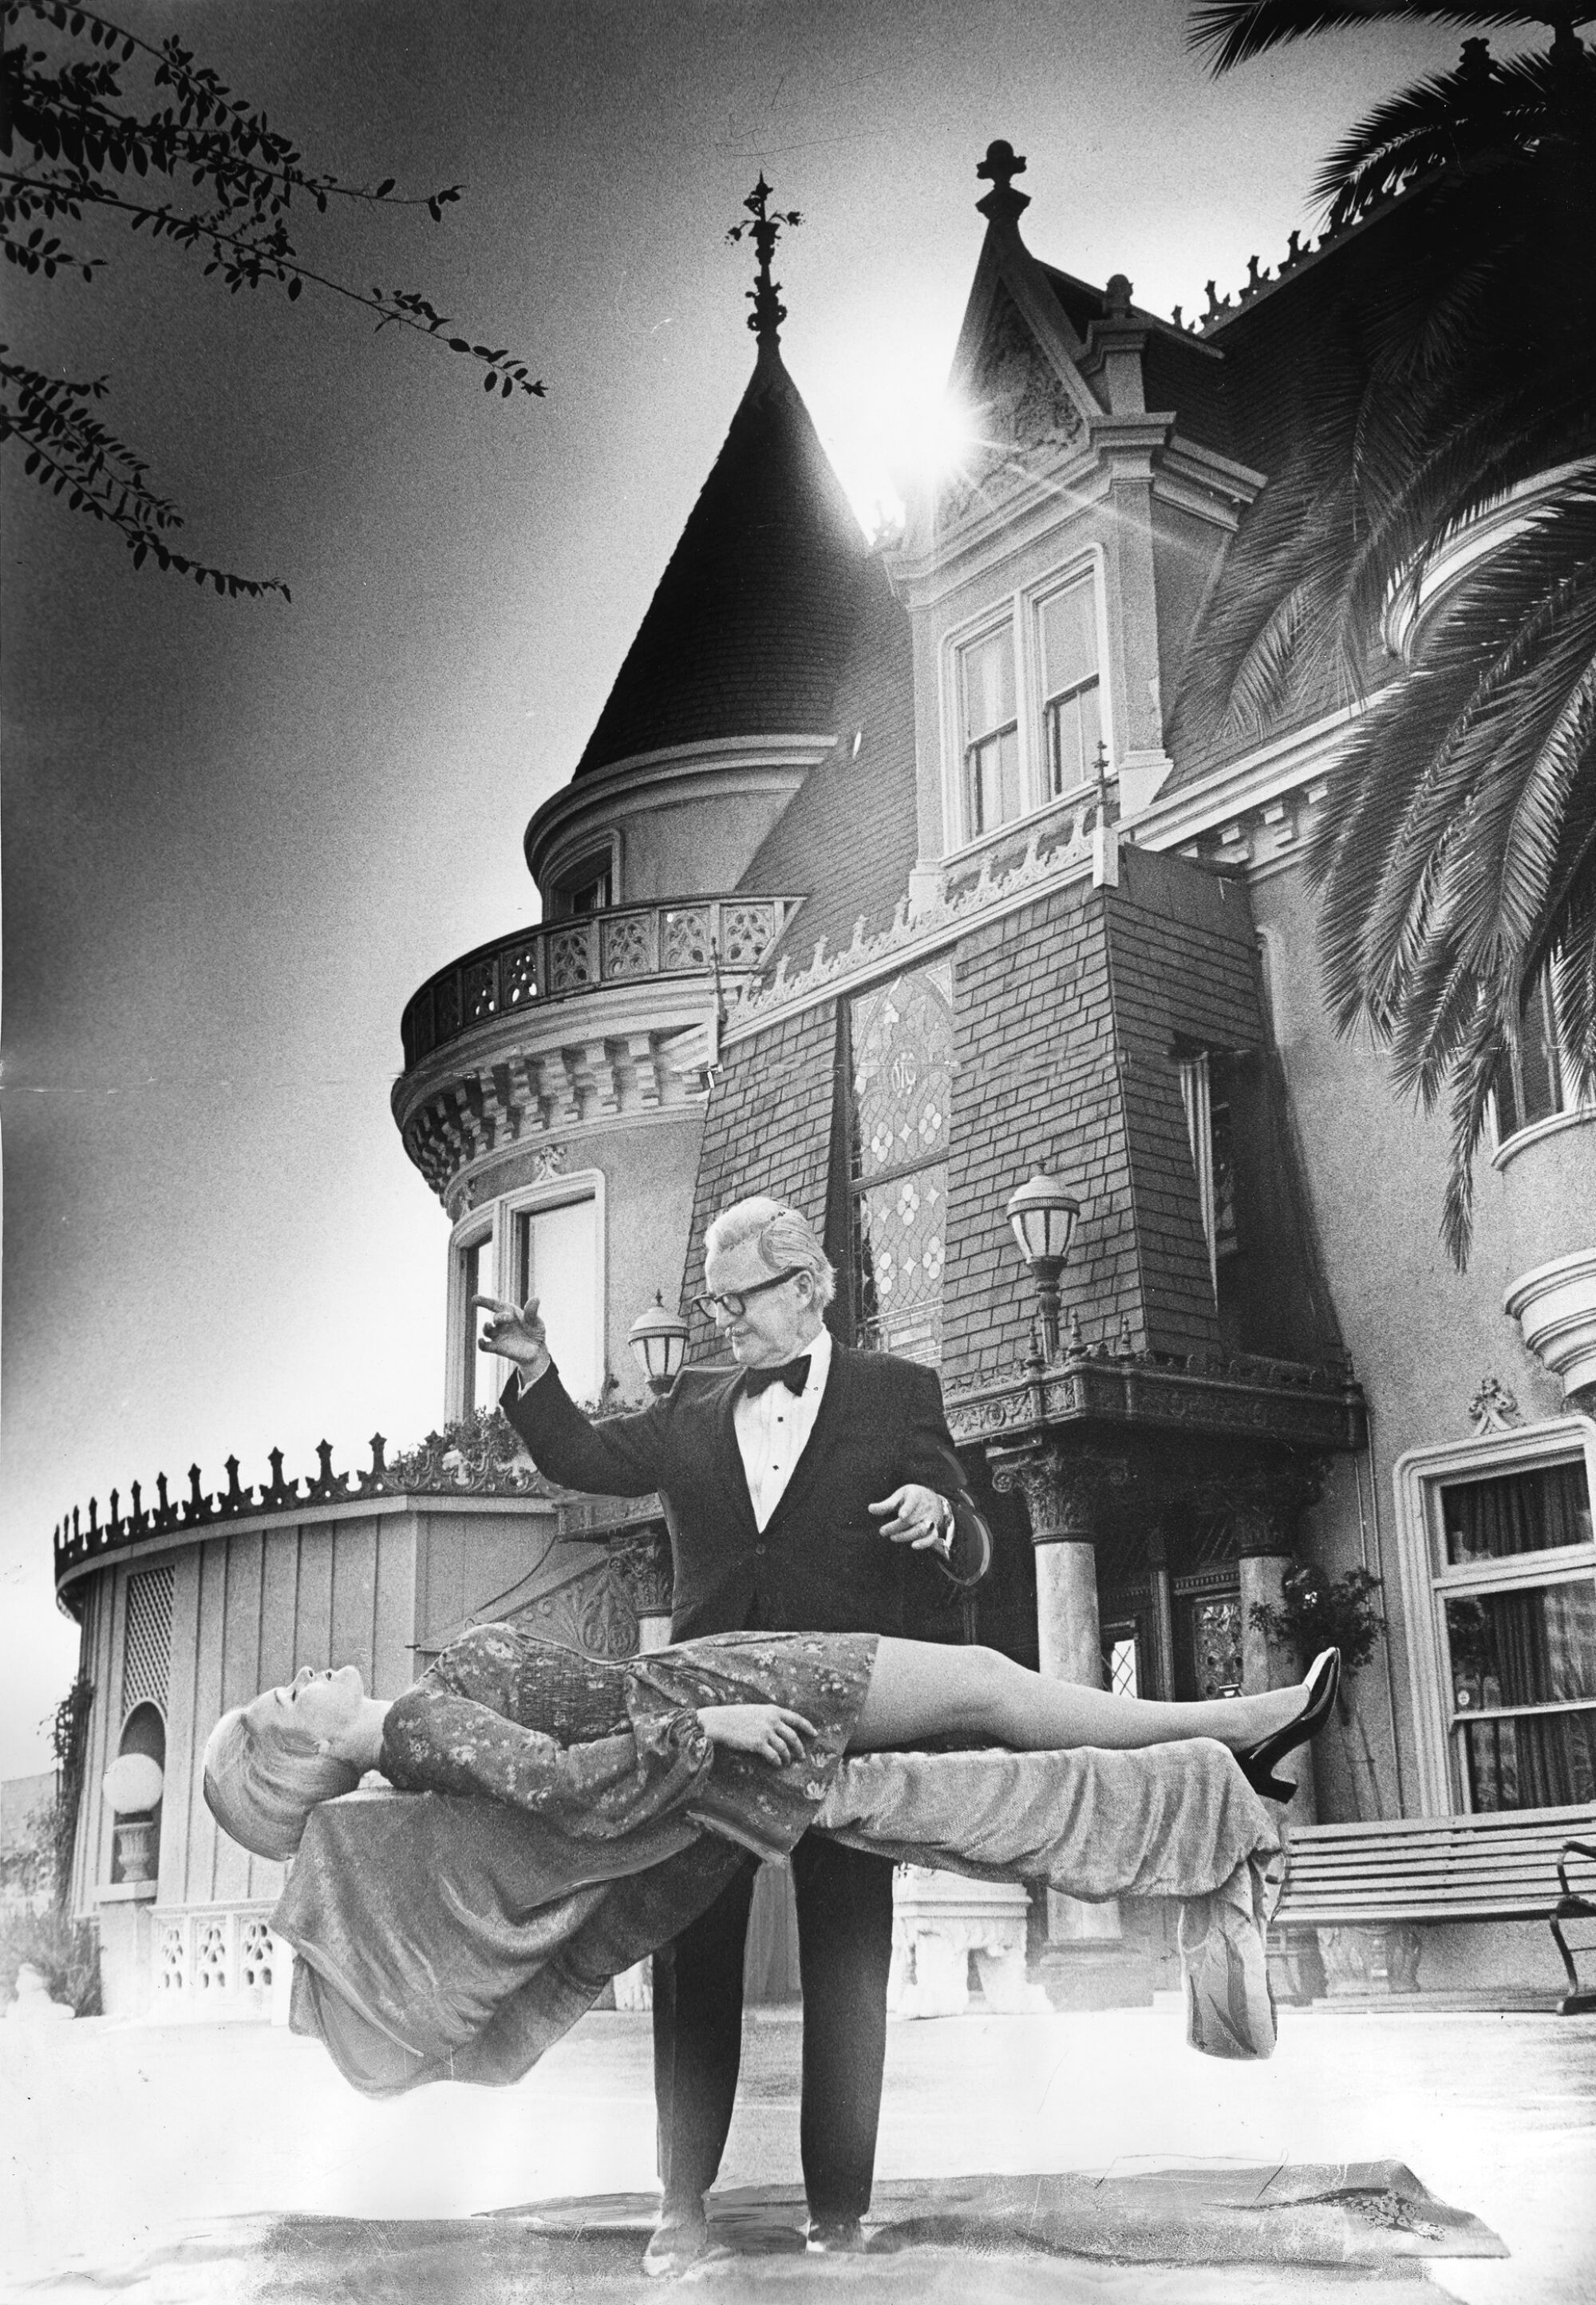 A 1970 photo of magician Dai Vernon levitating Magic Castle co-founder Irene Larsen outside the Magic Castle.